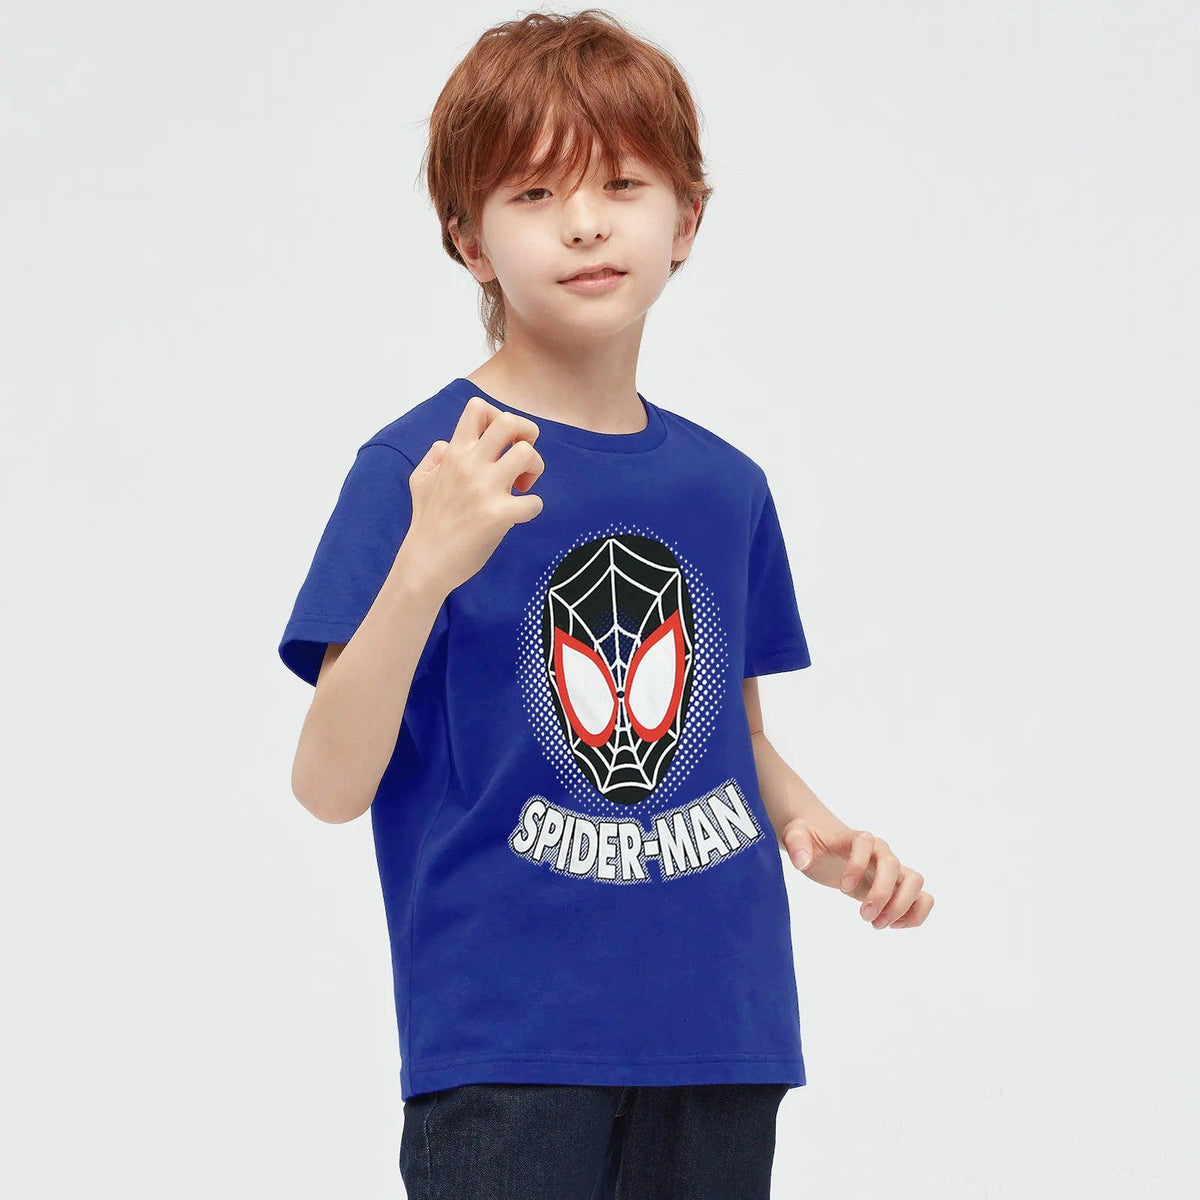 Boys Printed Soft Cotton T-Shirt 9 MONTH - 10 YRS (MI-10949) - Brands River